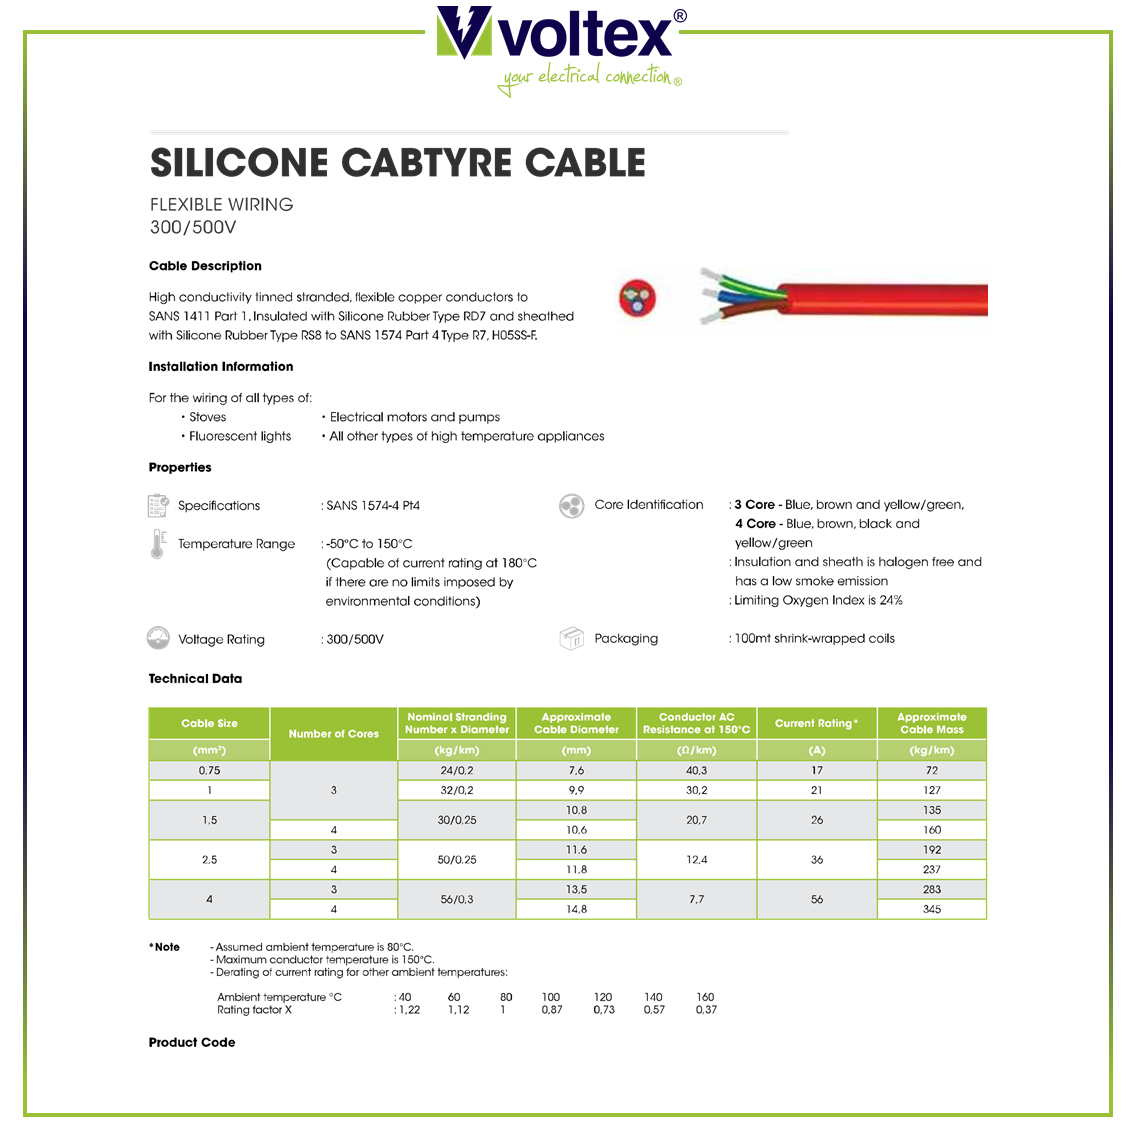 VOLTEX - Silicone Cabtyre Cable Catalogue